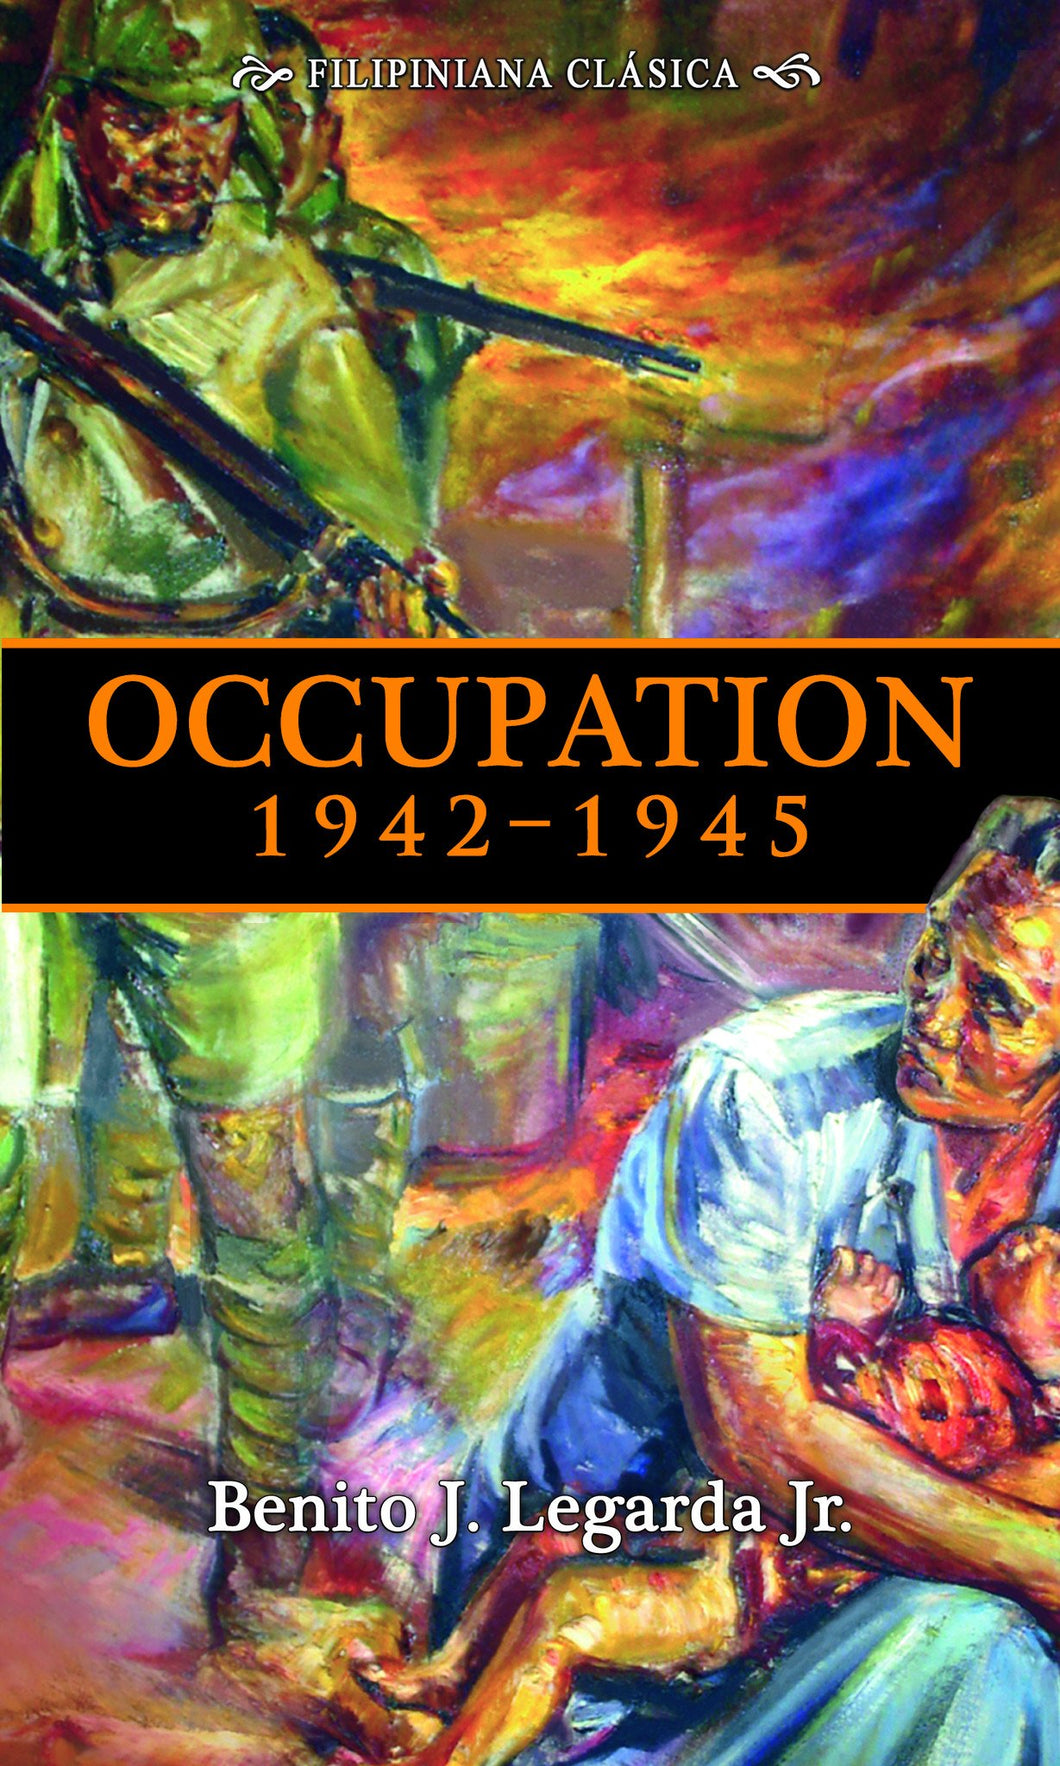 Occupation (1942 - 1945)